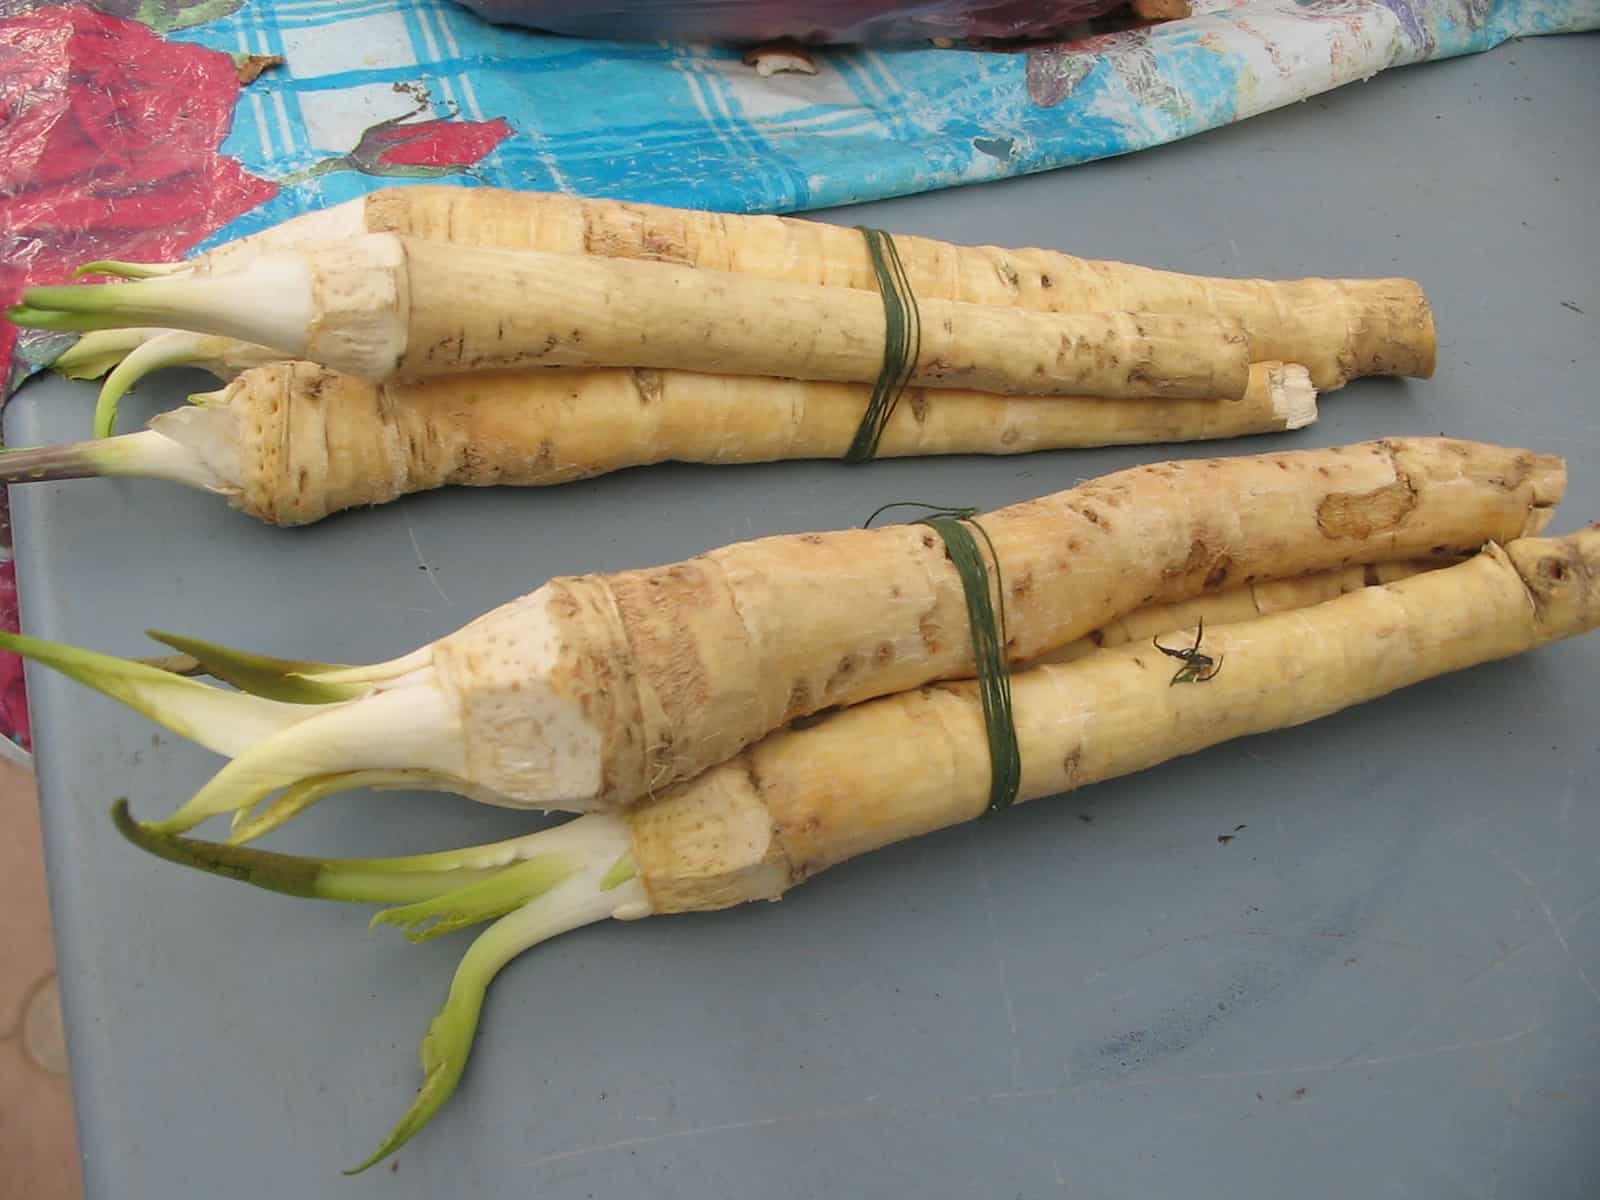 Horseradish, food and medicine